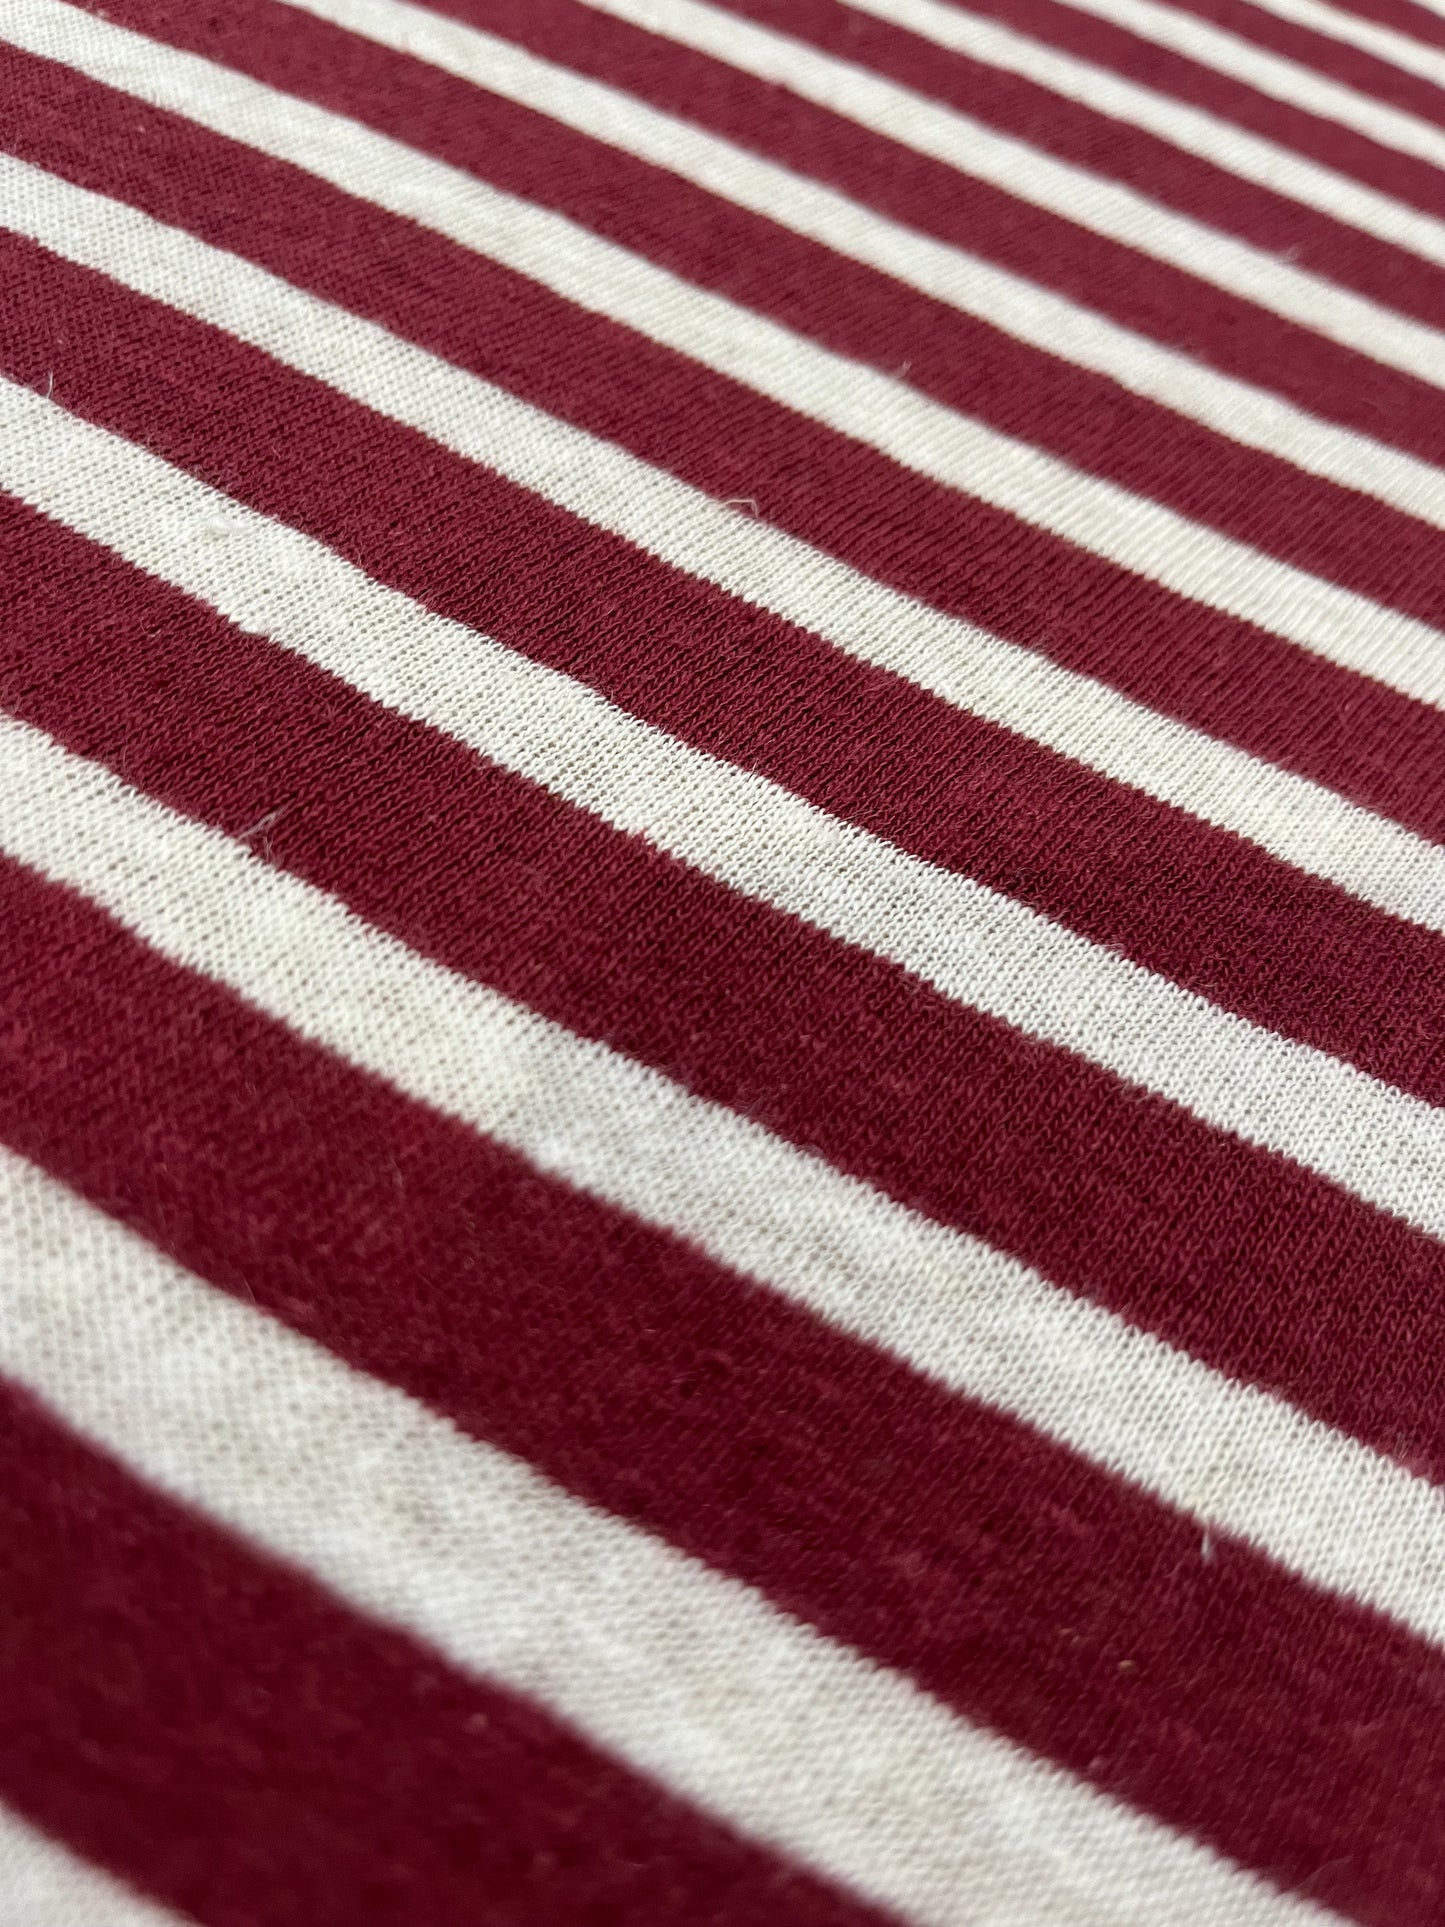 MERANO 007 jersey linen/cotton stripes